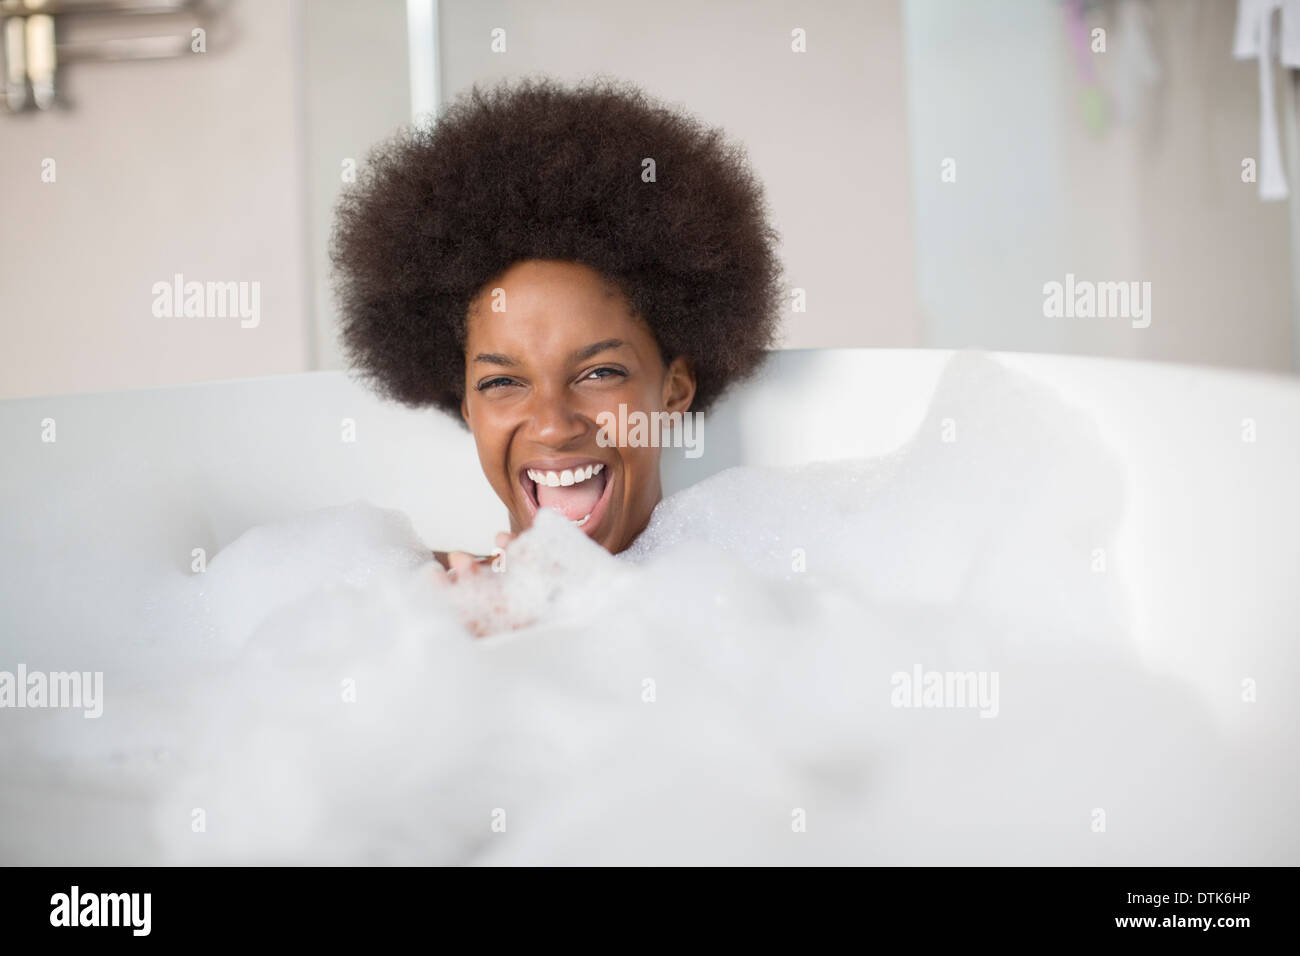 Woman laughing in bubble bath Banque D'Images